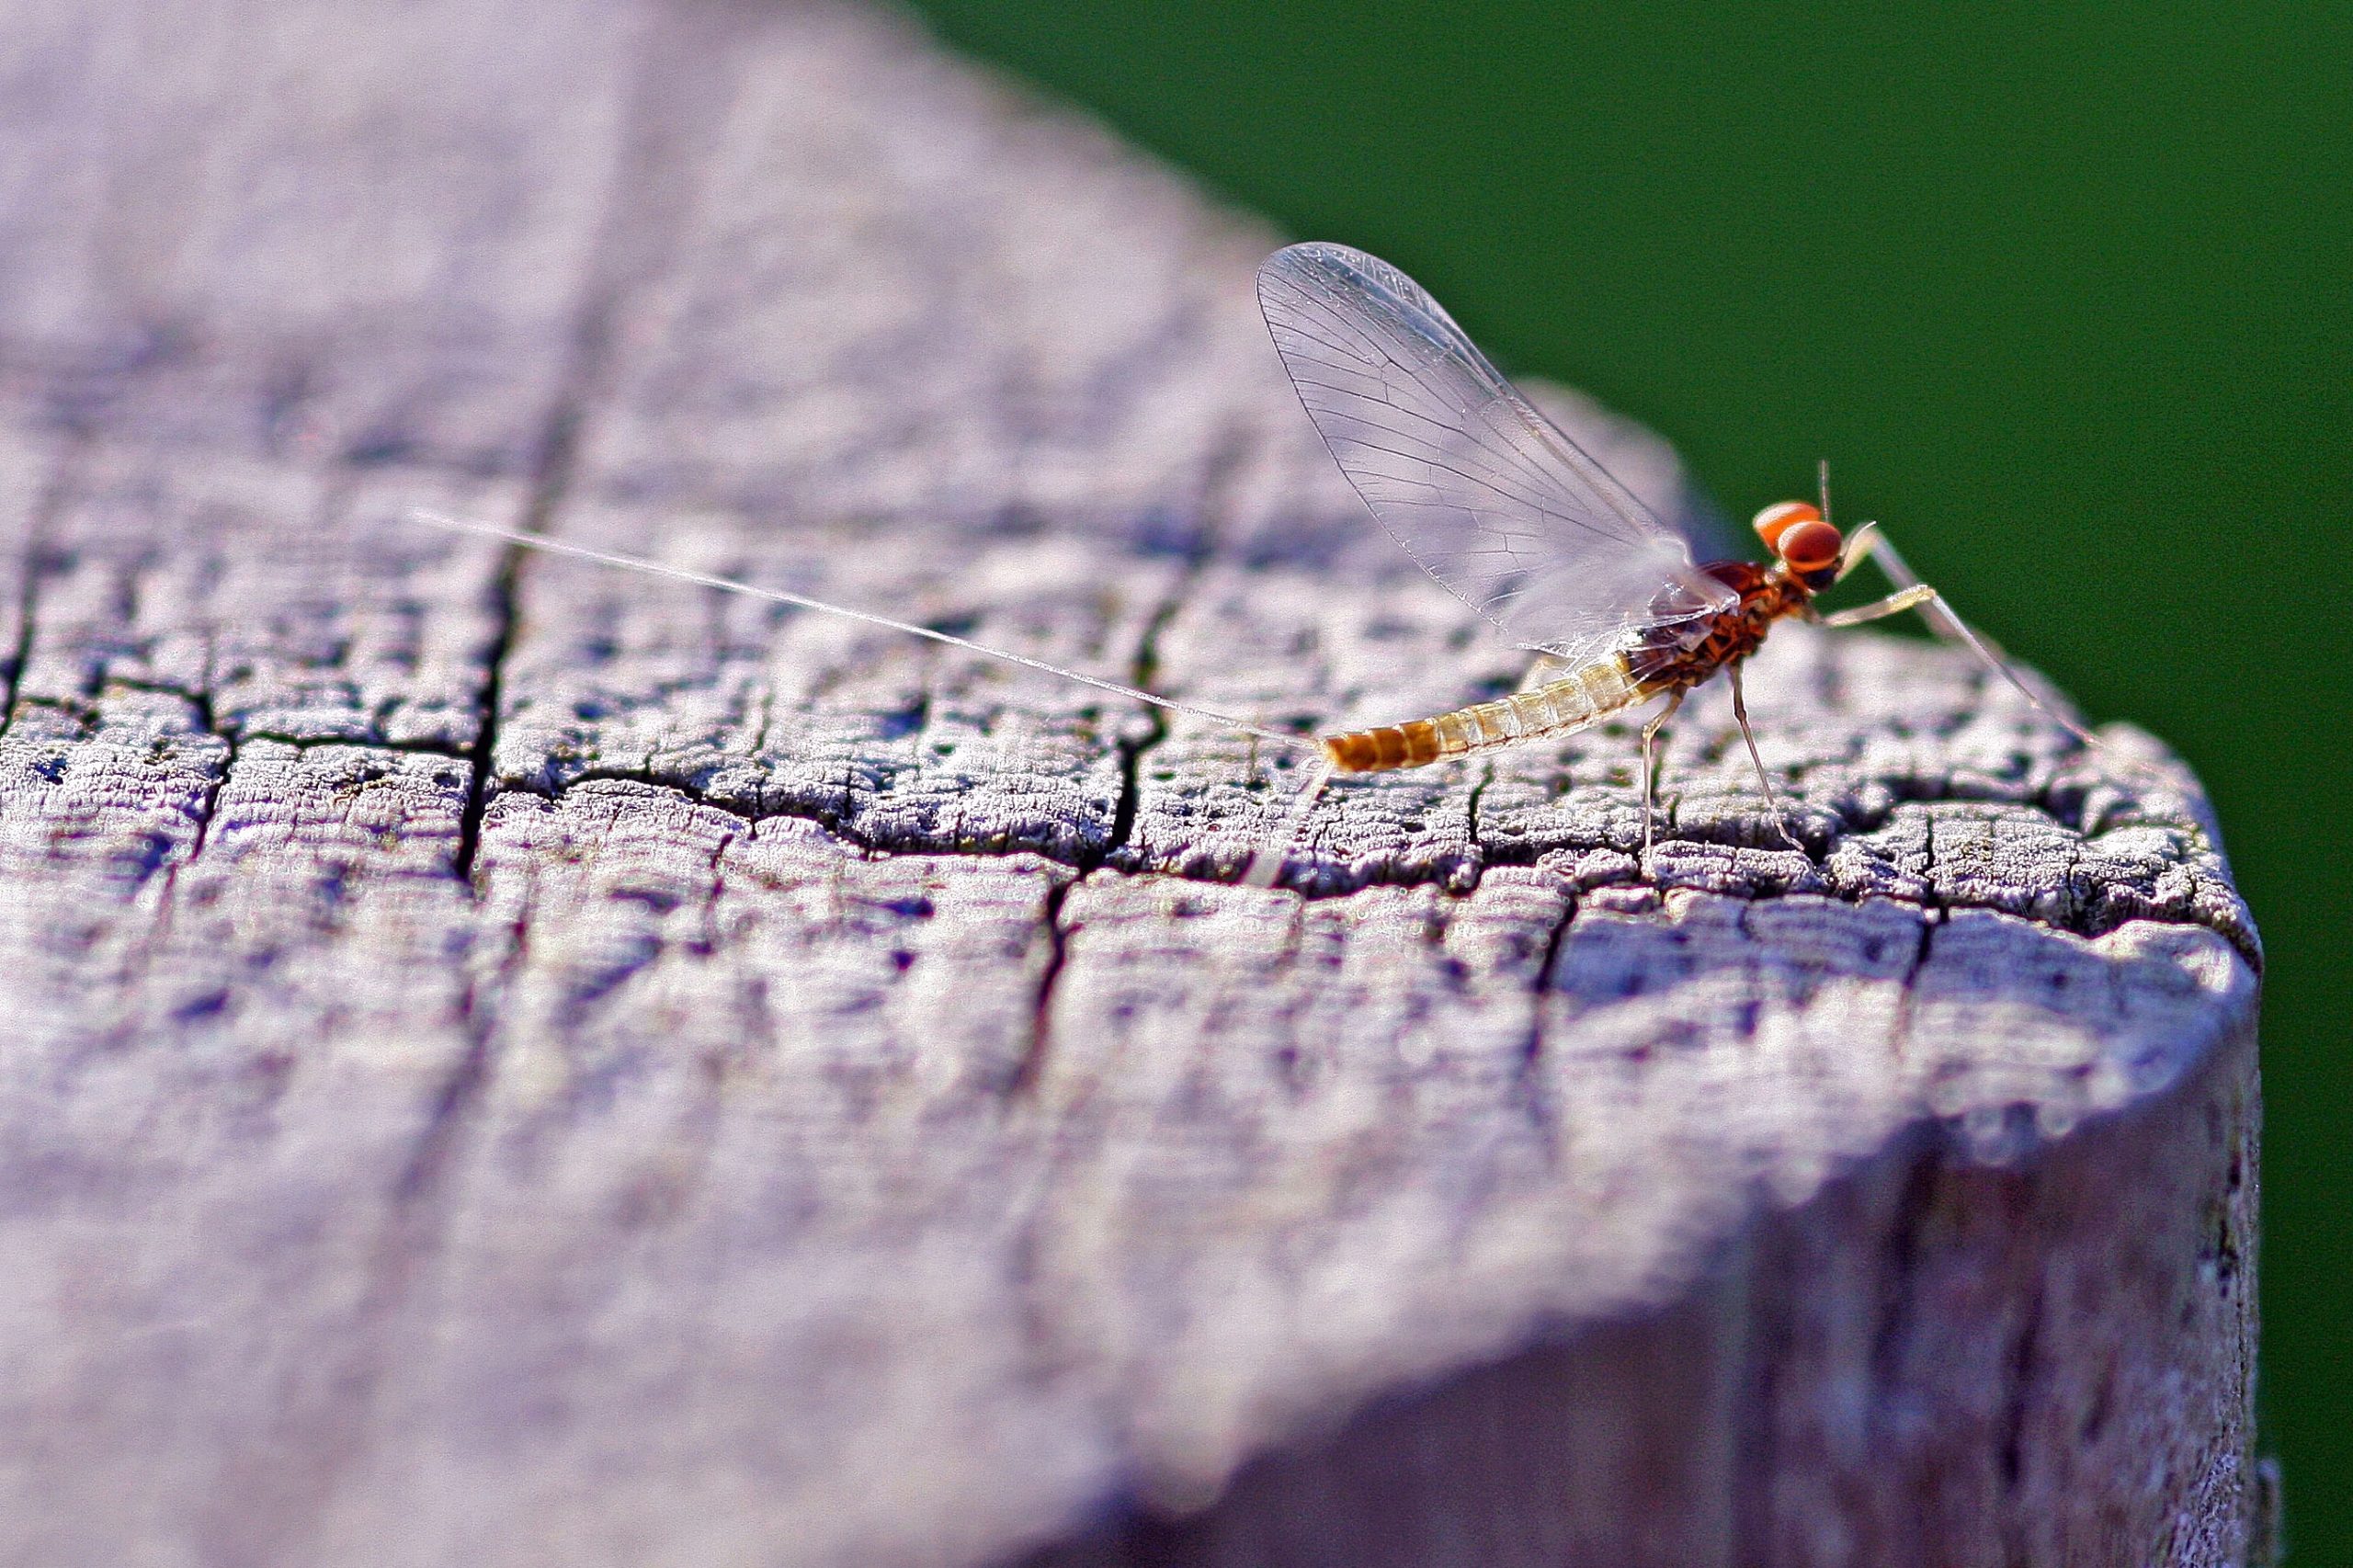 A mayfly on a fence post